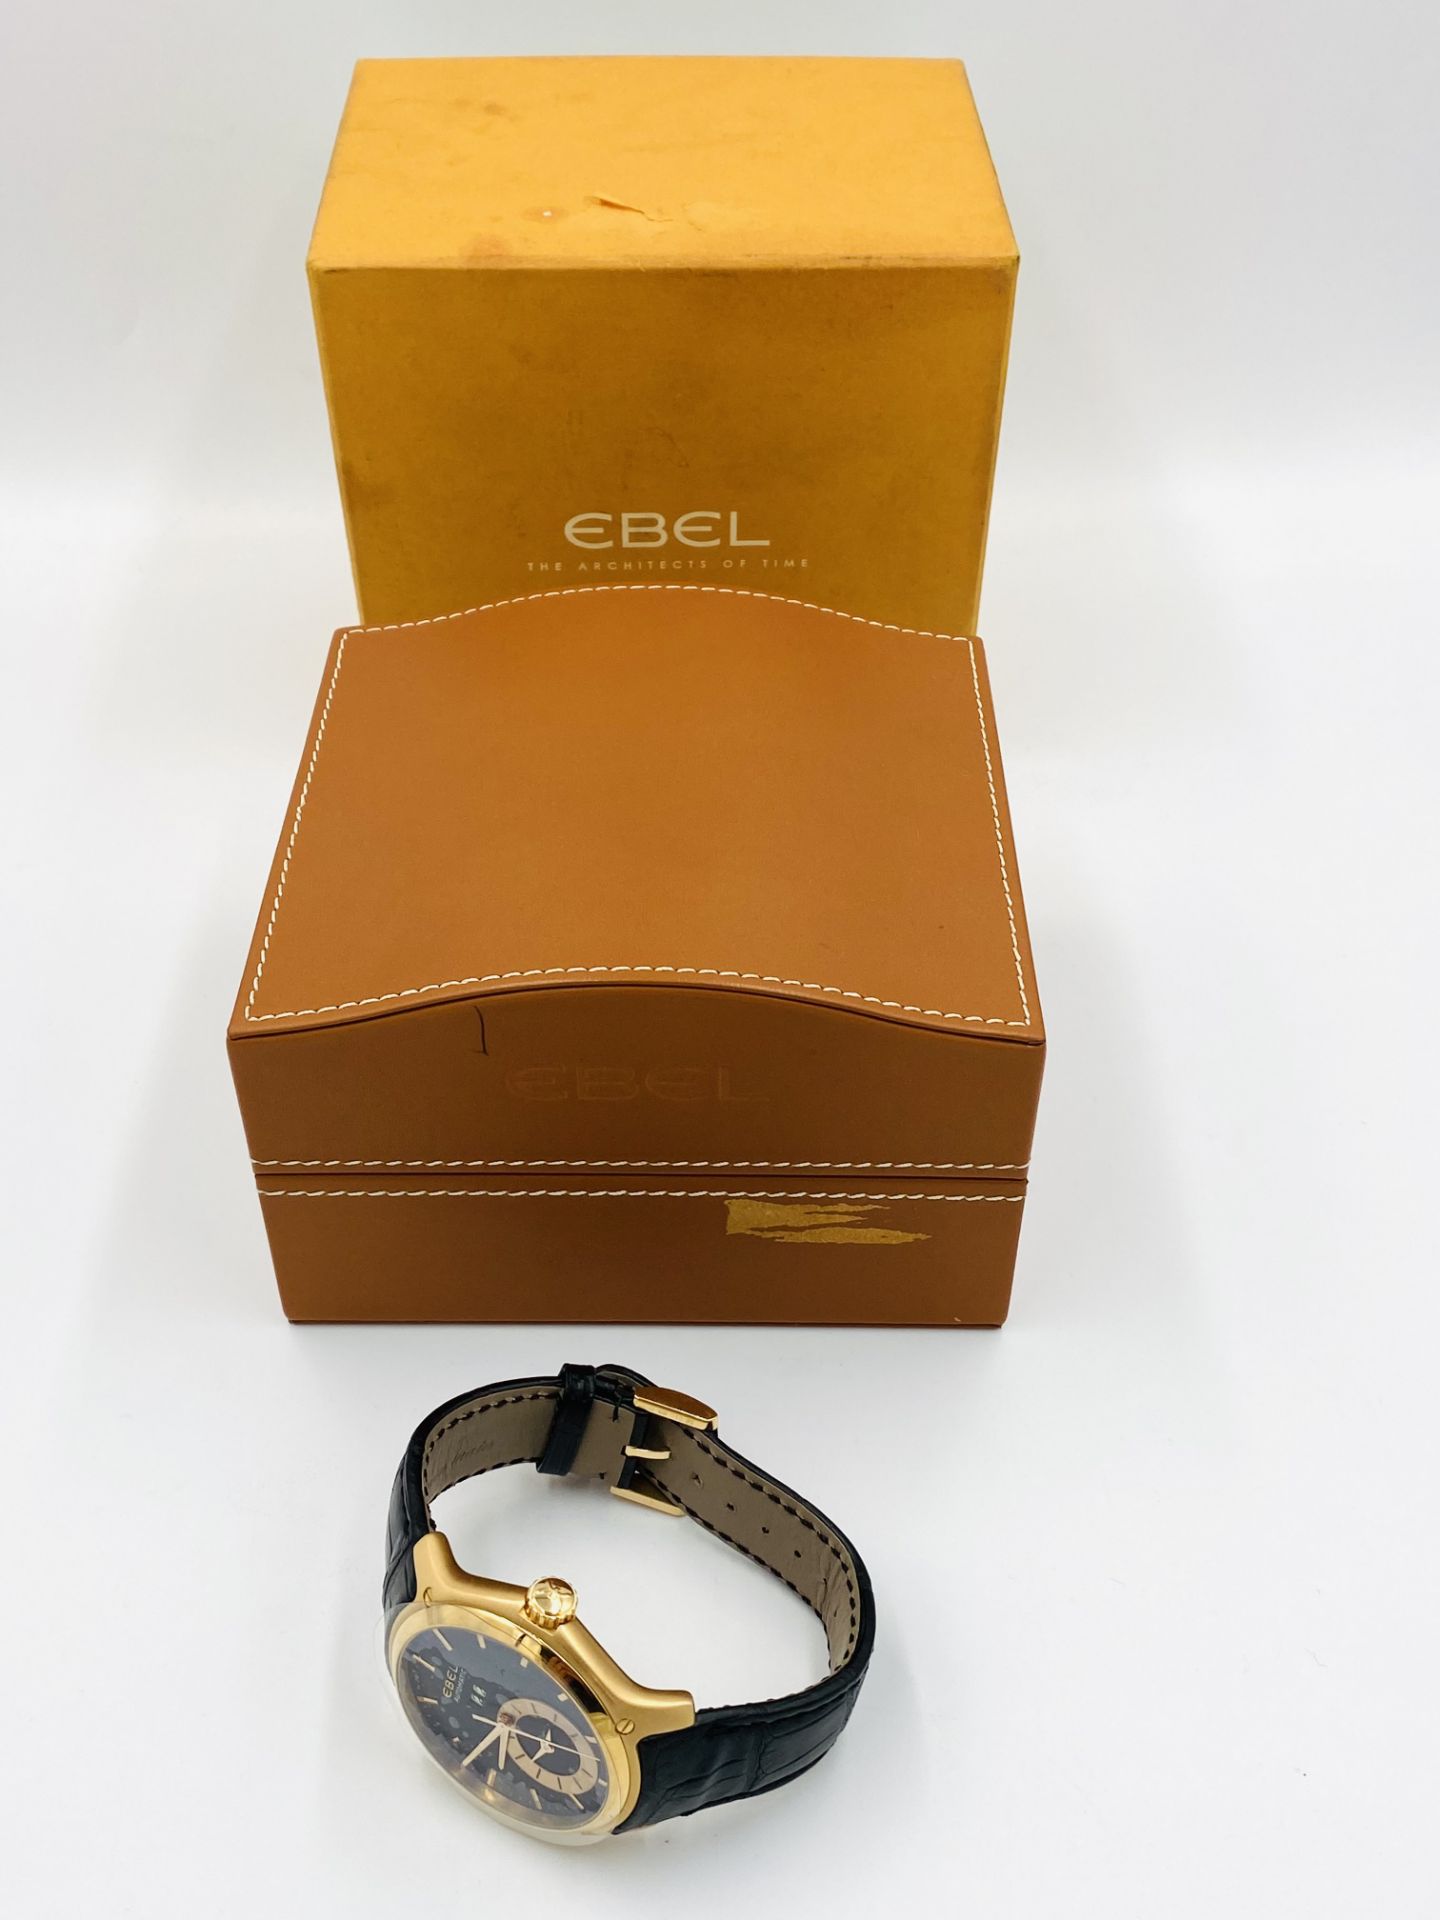 18ct gold Ebel wrist watch - Image 5 of 5